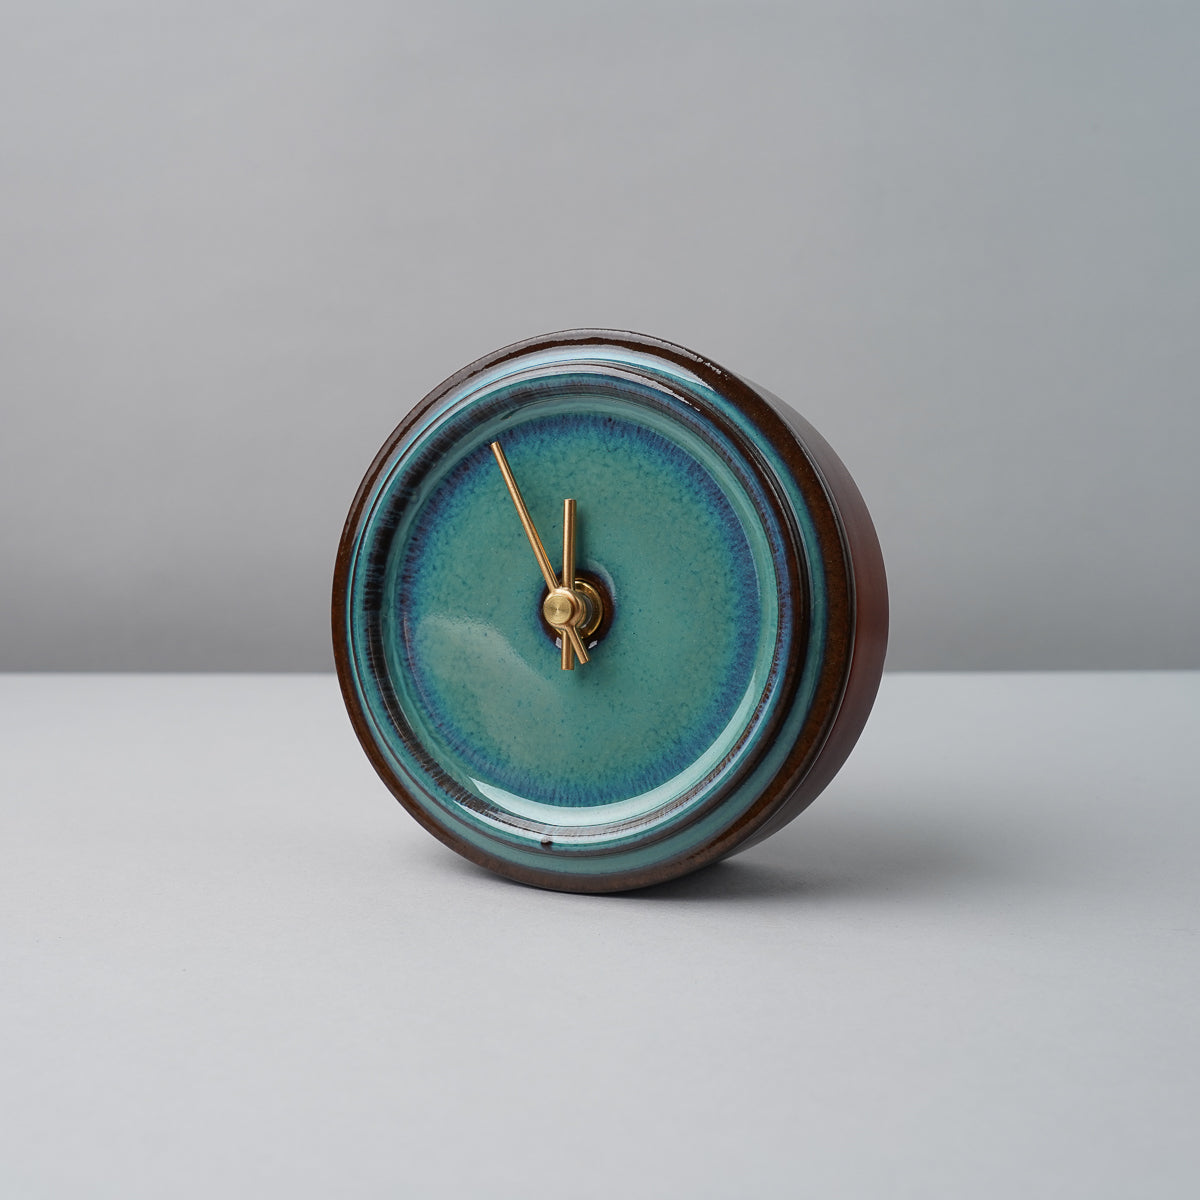 美濃焼 TILE WOOD CLOCK 陶器時計 置き時計 電池付 青海鼠釉(WZ-02) SUGY Studio1156